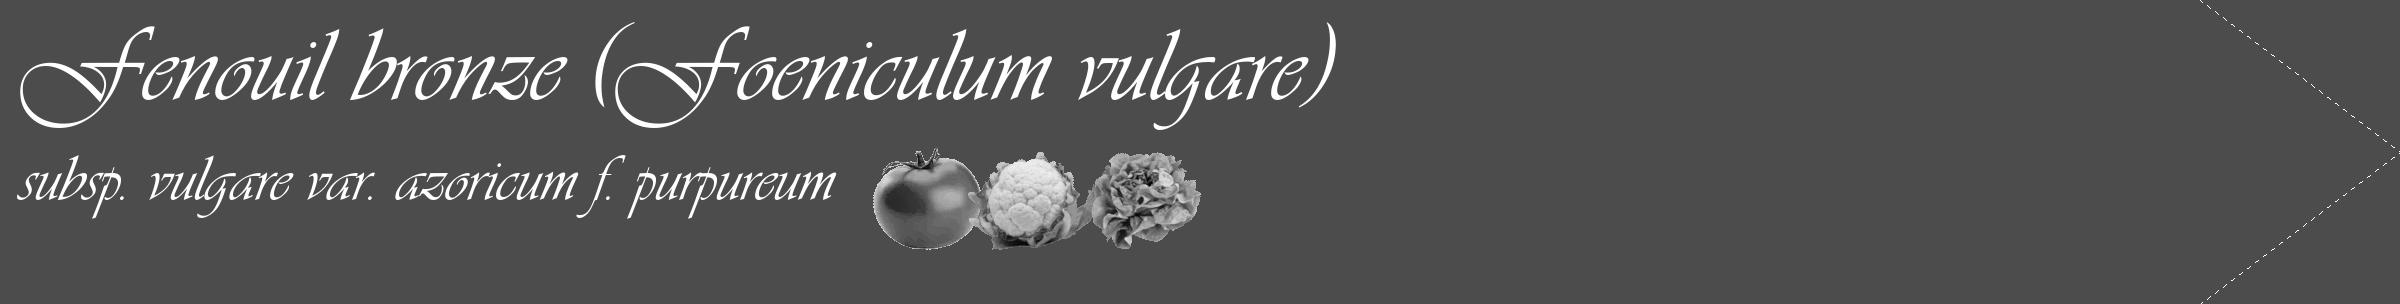 Étiquette de : Foeniculum vulgare subsp. vulgare var. azoricum f. purpureum - format c - style blanche27_simple_simpleviv avec comestibilité simplifiée